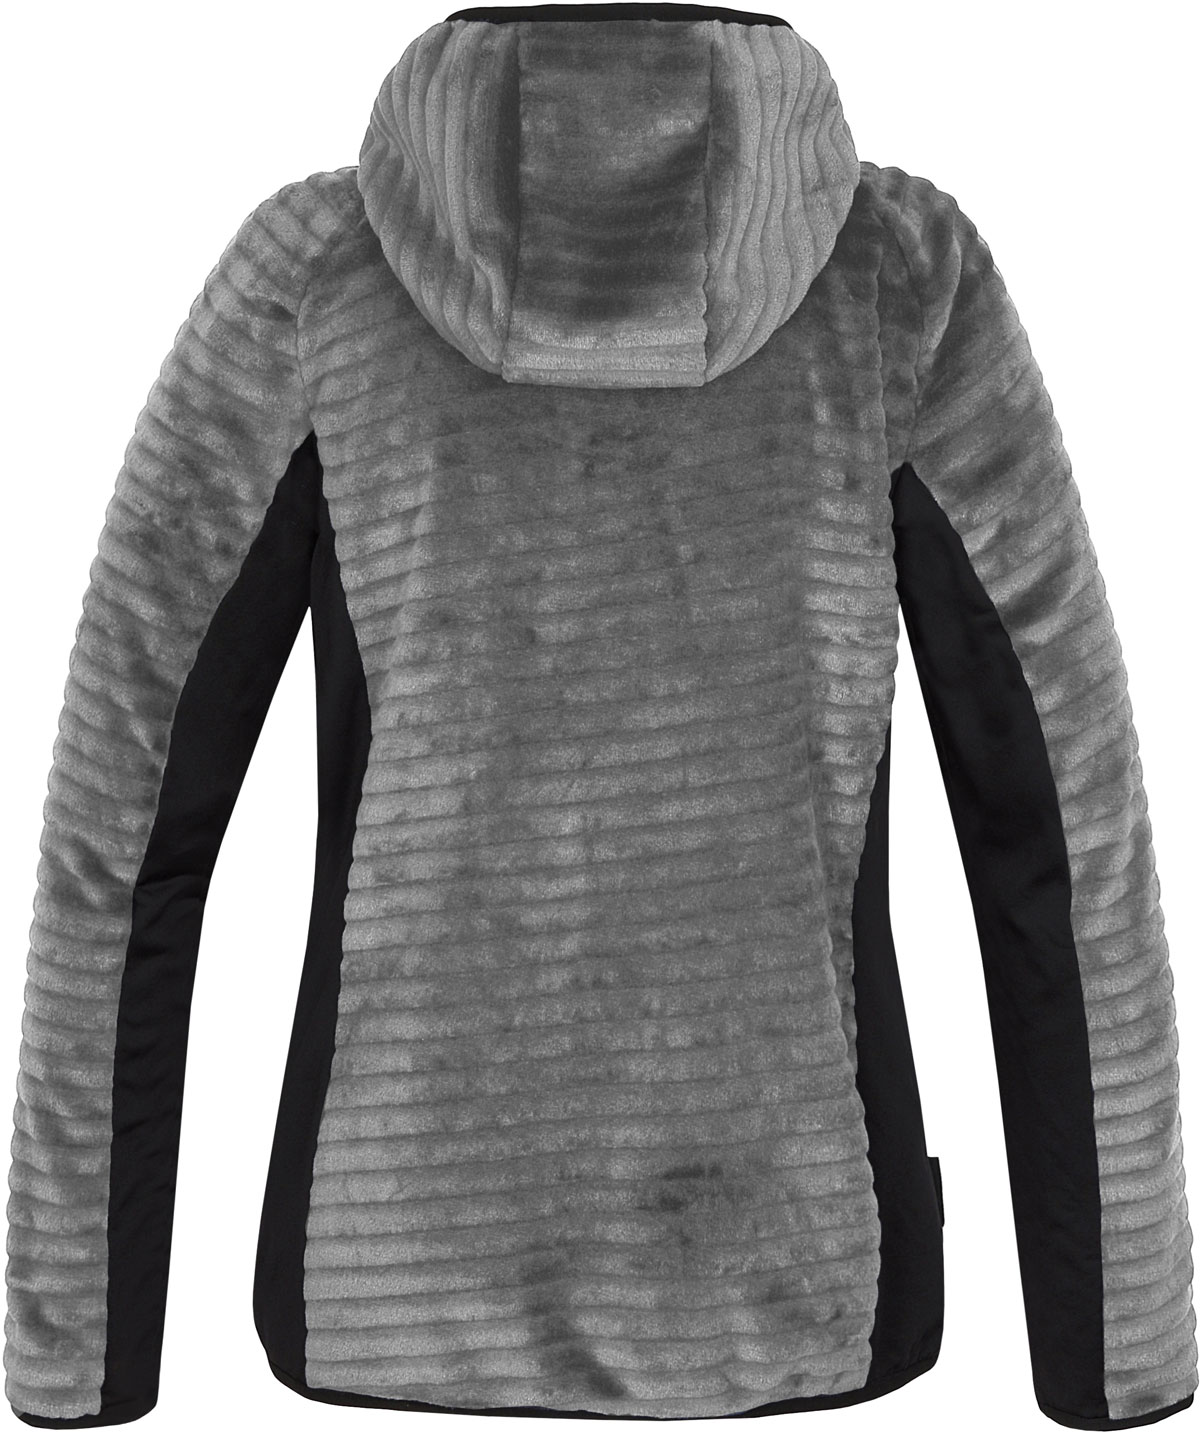 Women's functional sweatshirt